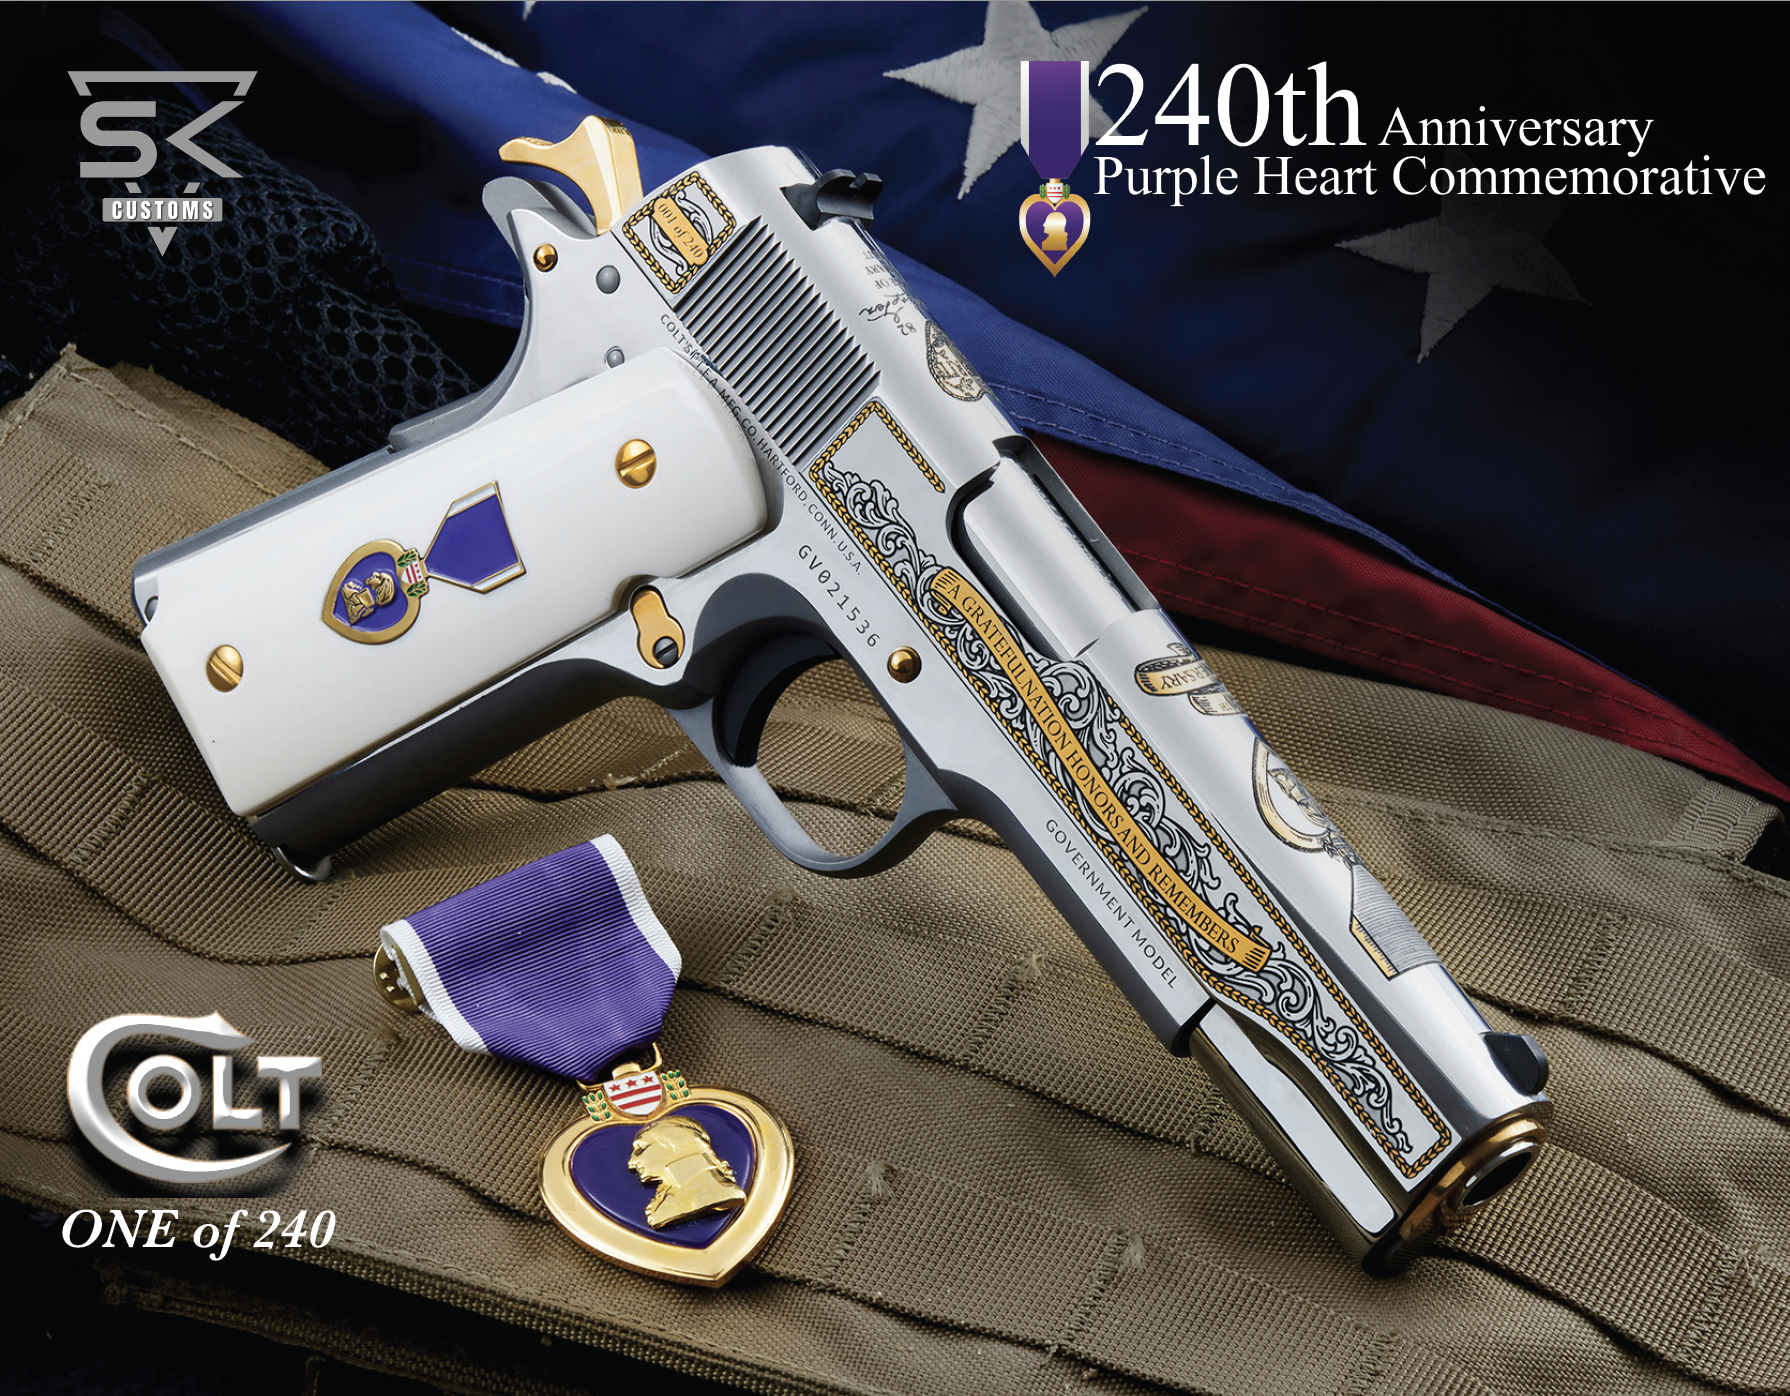 New Purple Heart Commemorative Colt 1911 Announced by SK Customs